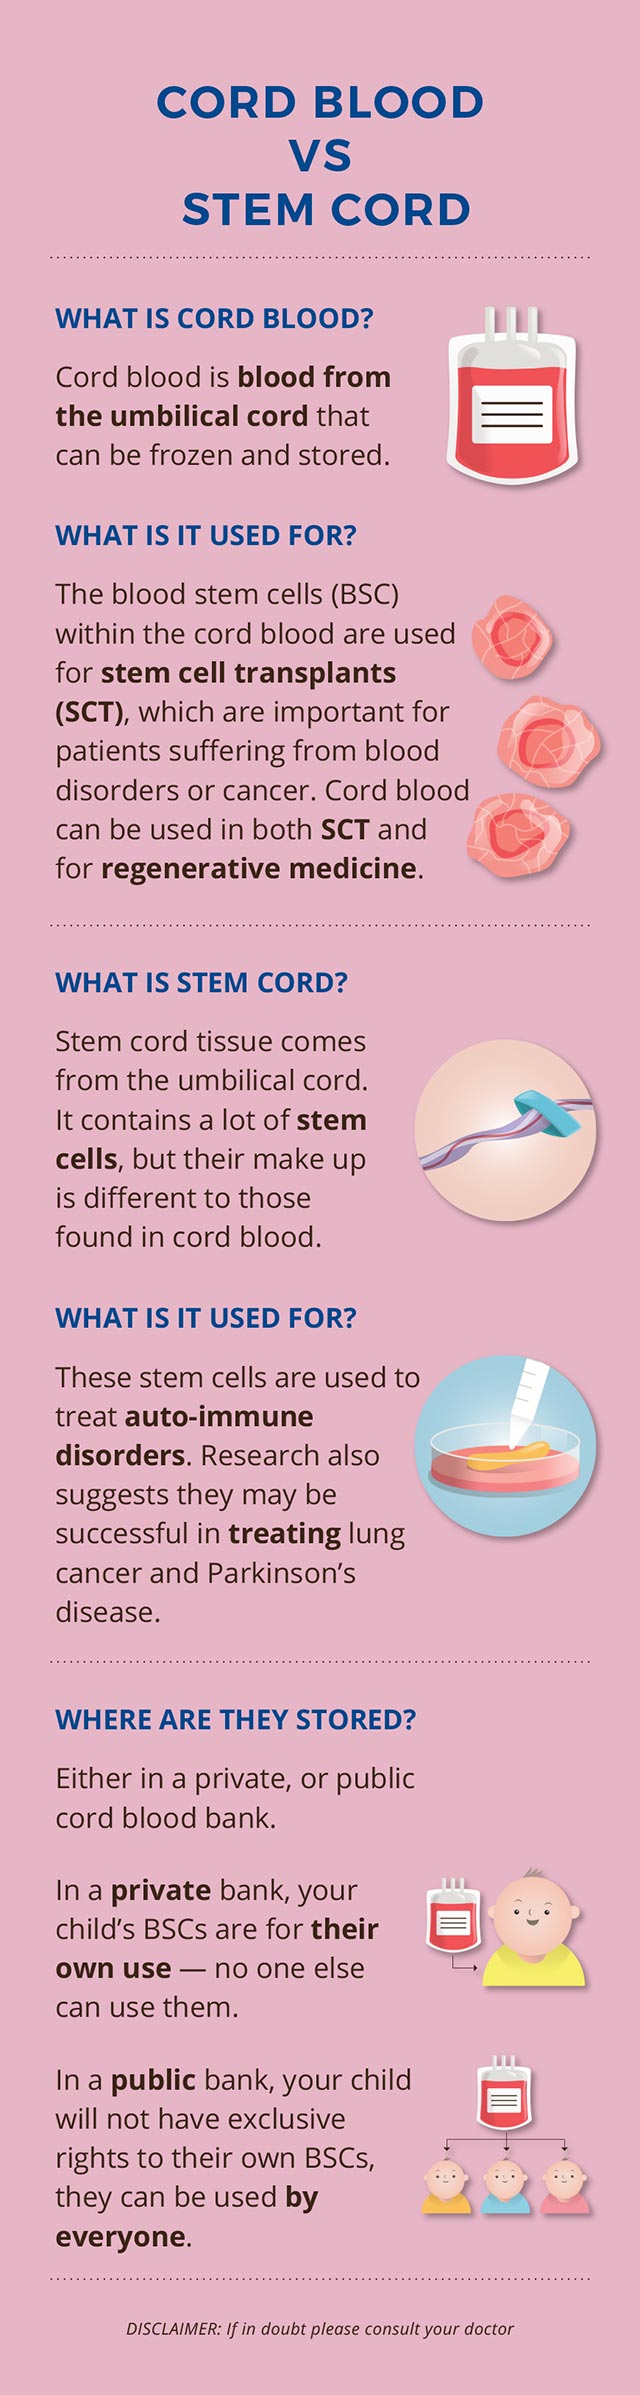 cord blood vs stem cord